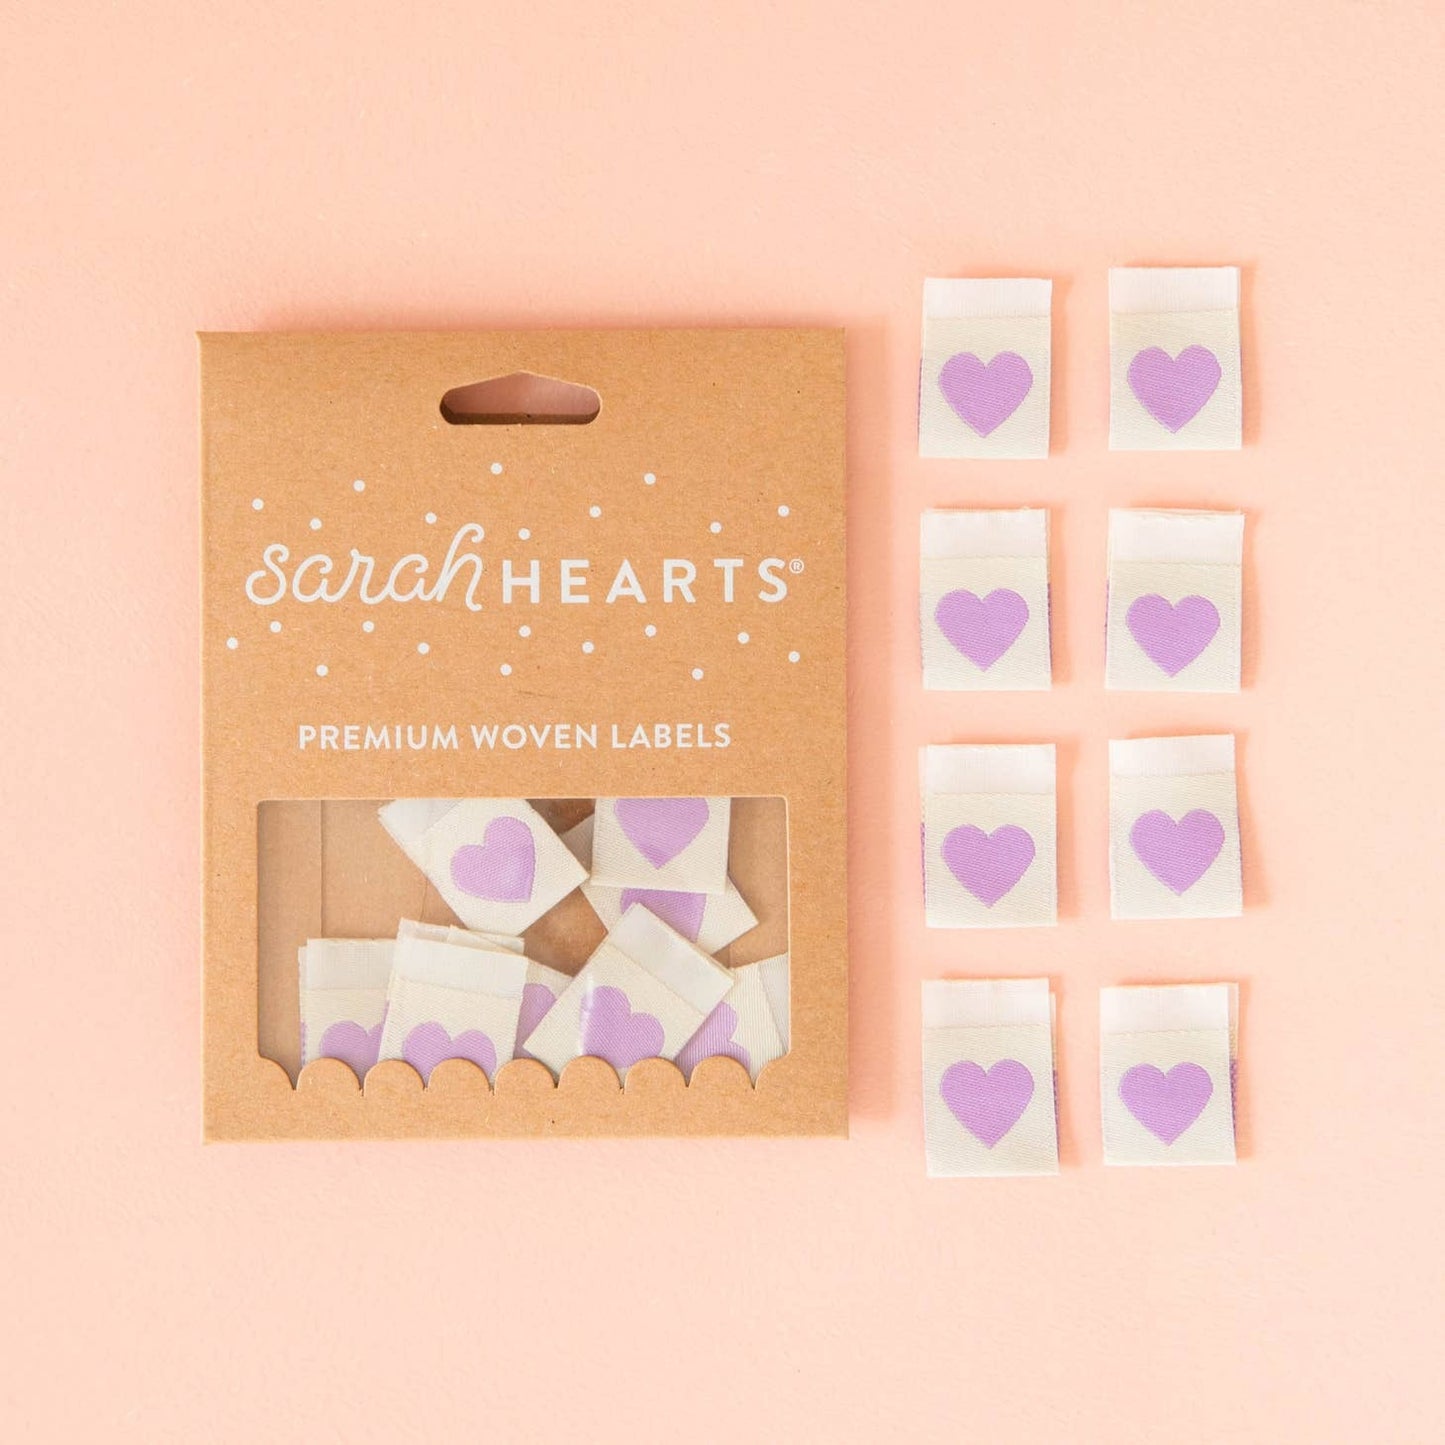 Sarah's Hearts Garment Tags / Labels